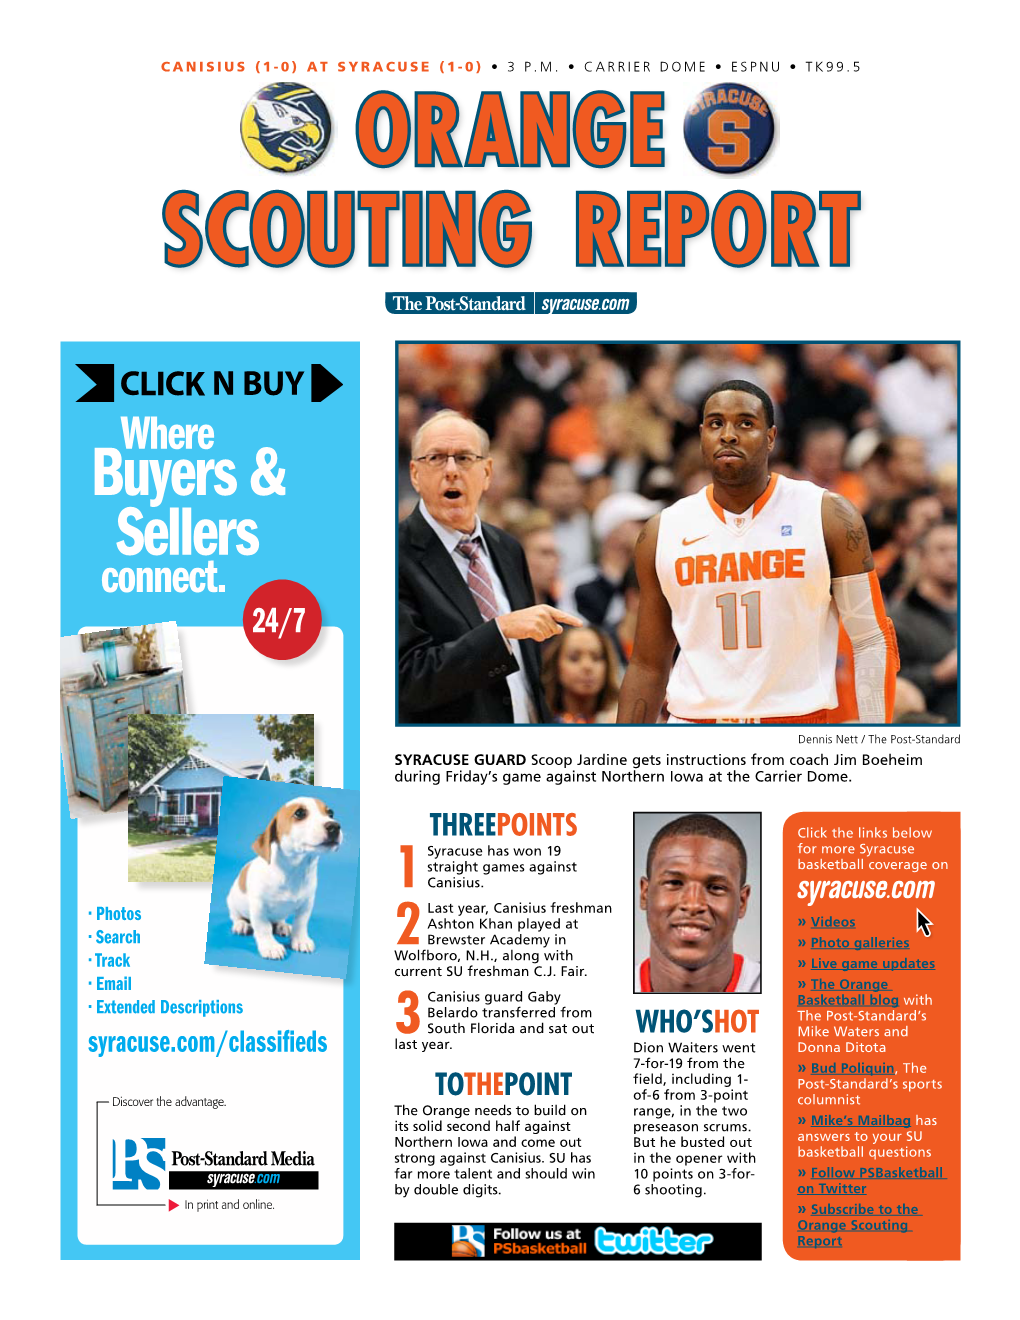 Orange Scouting Report